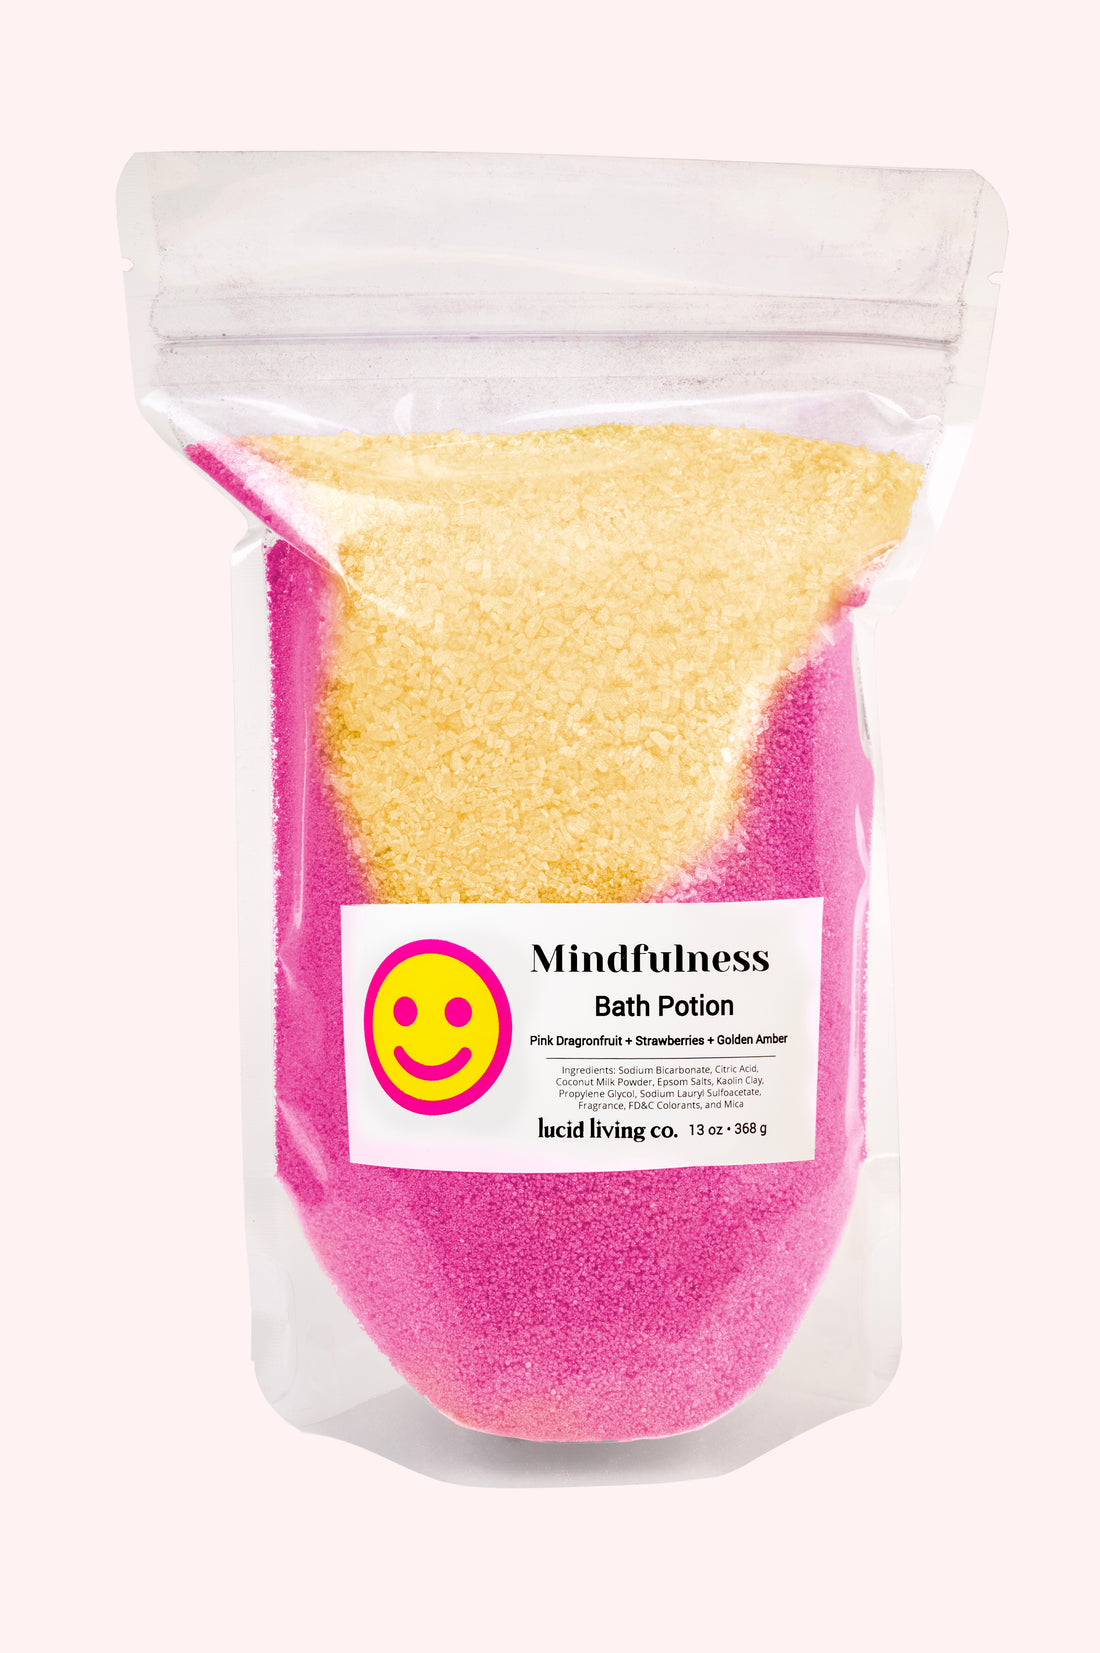 Mindfulness Bath Potion